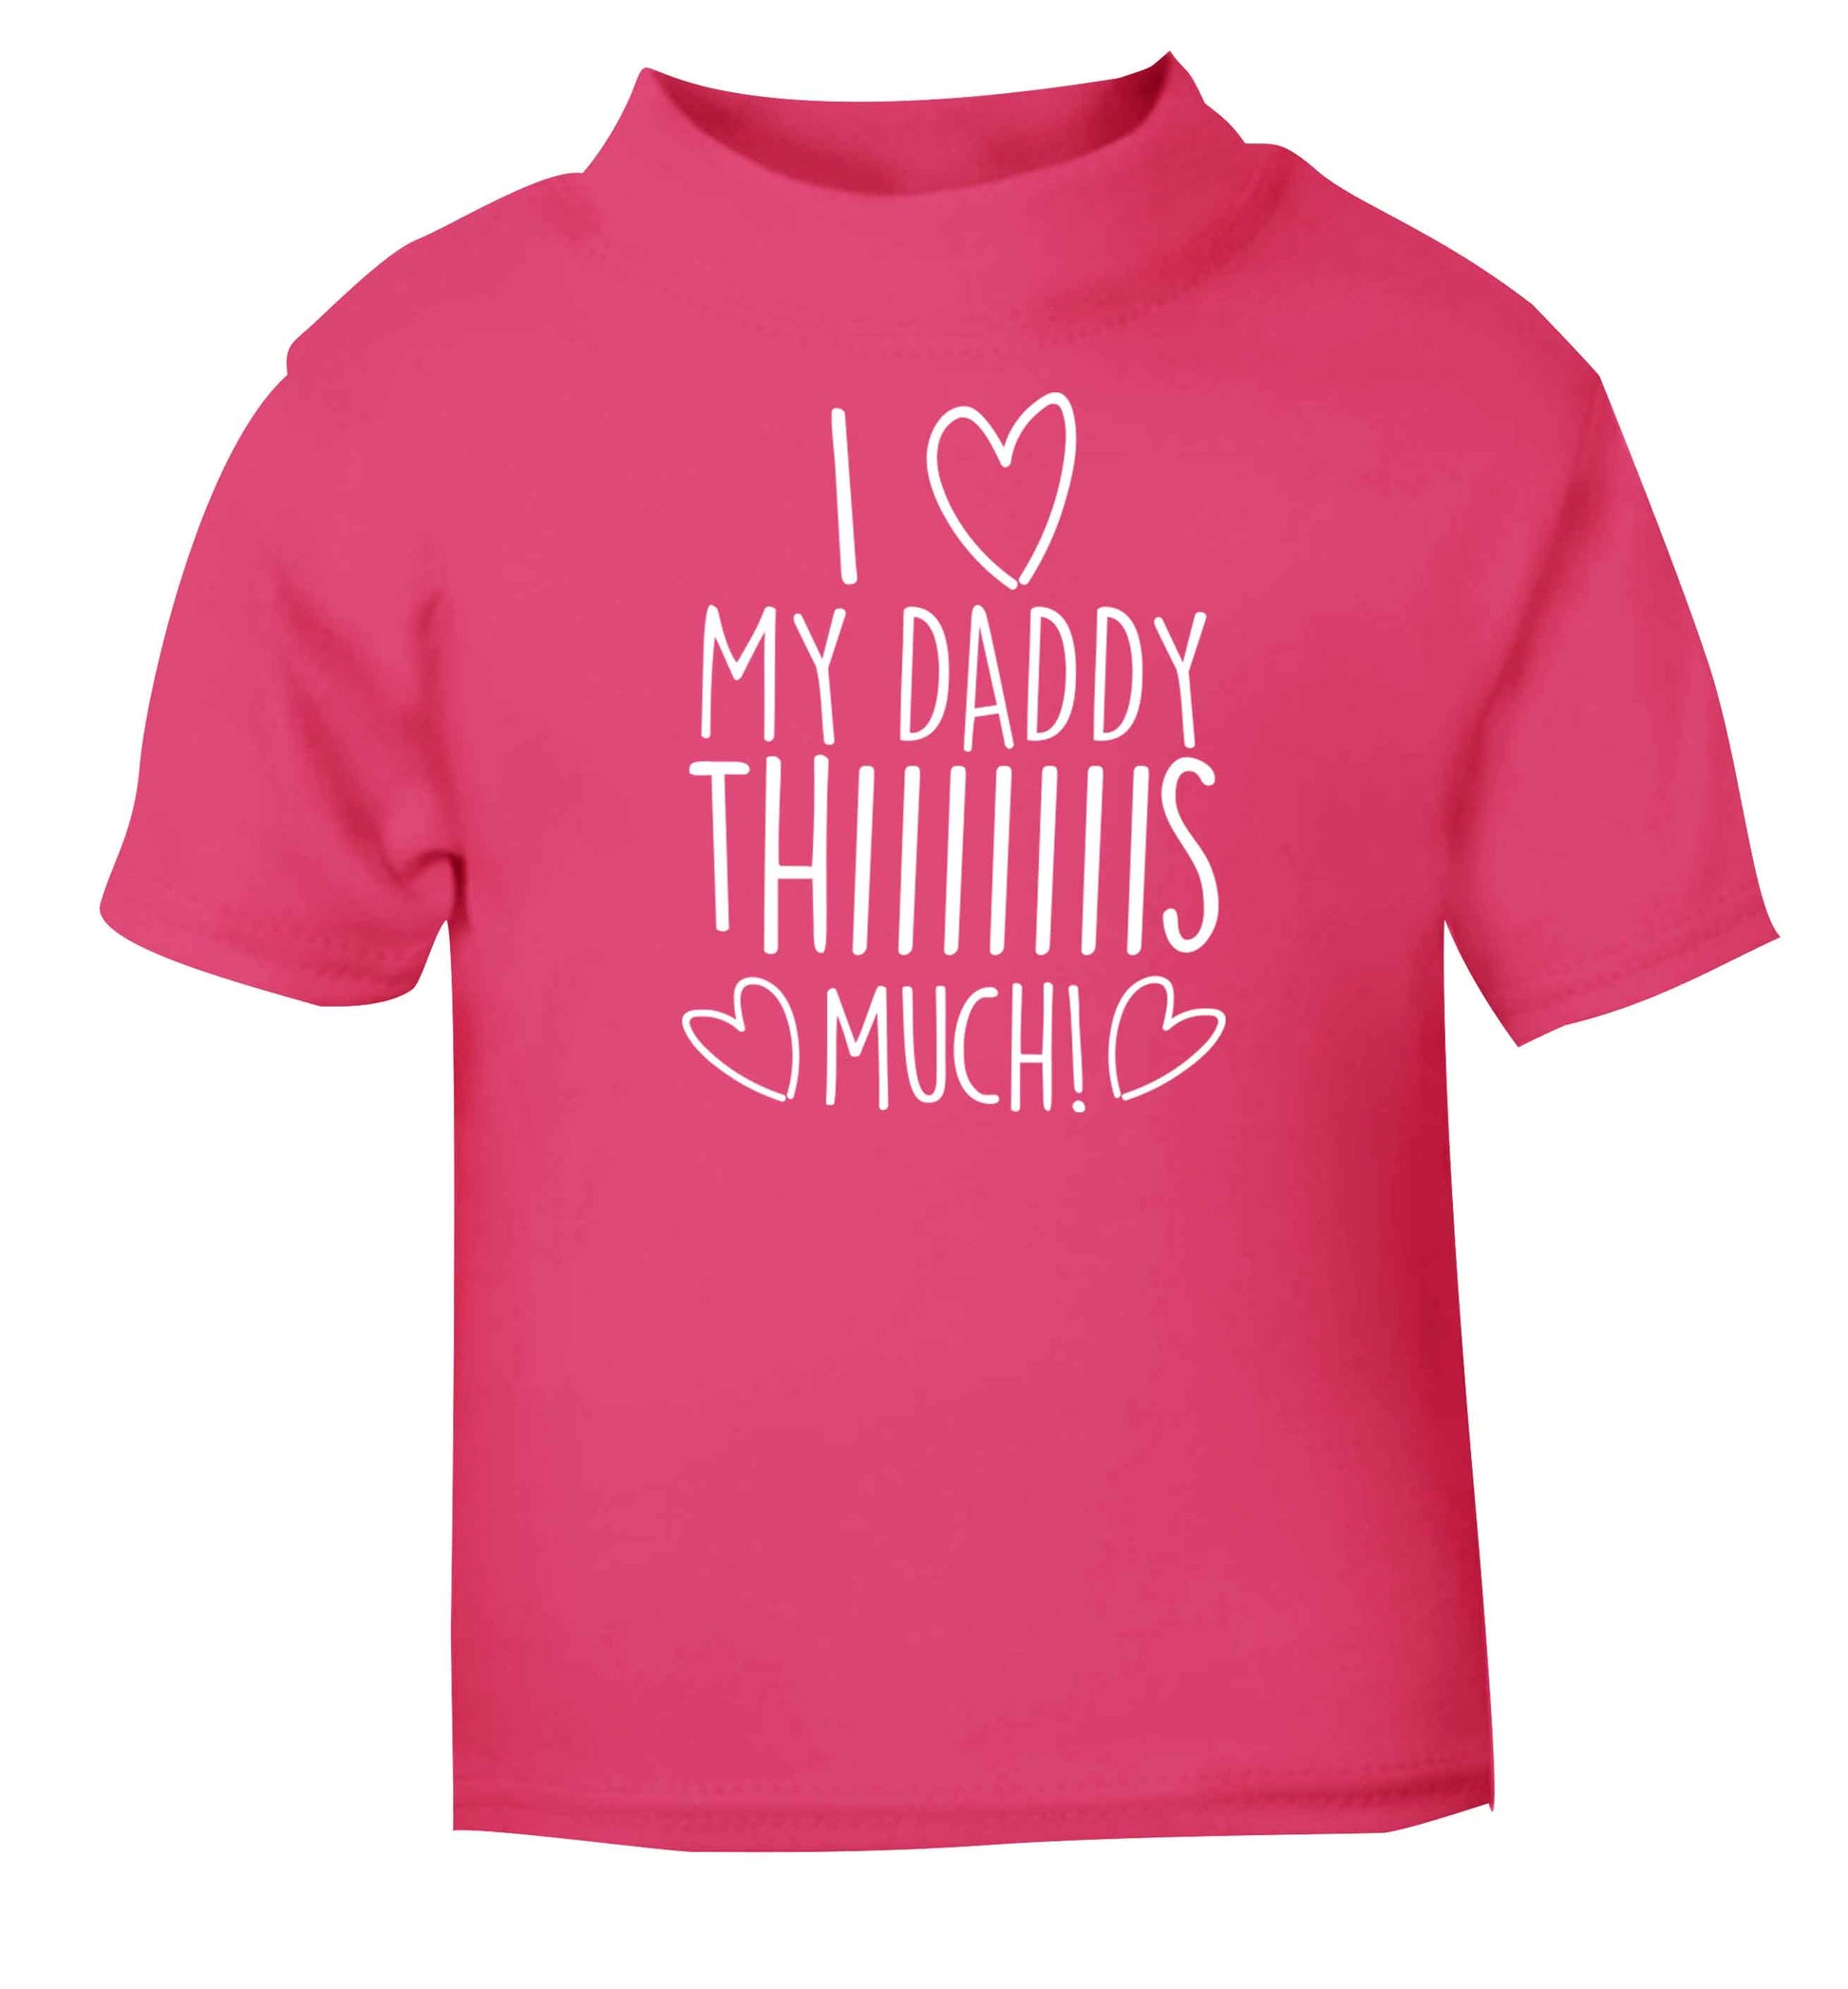 I love my daddy thiiiiis much! pink baby toddler Tshirt 2 Years